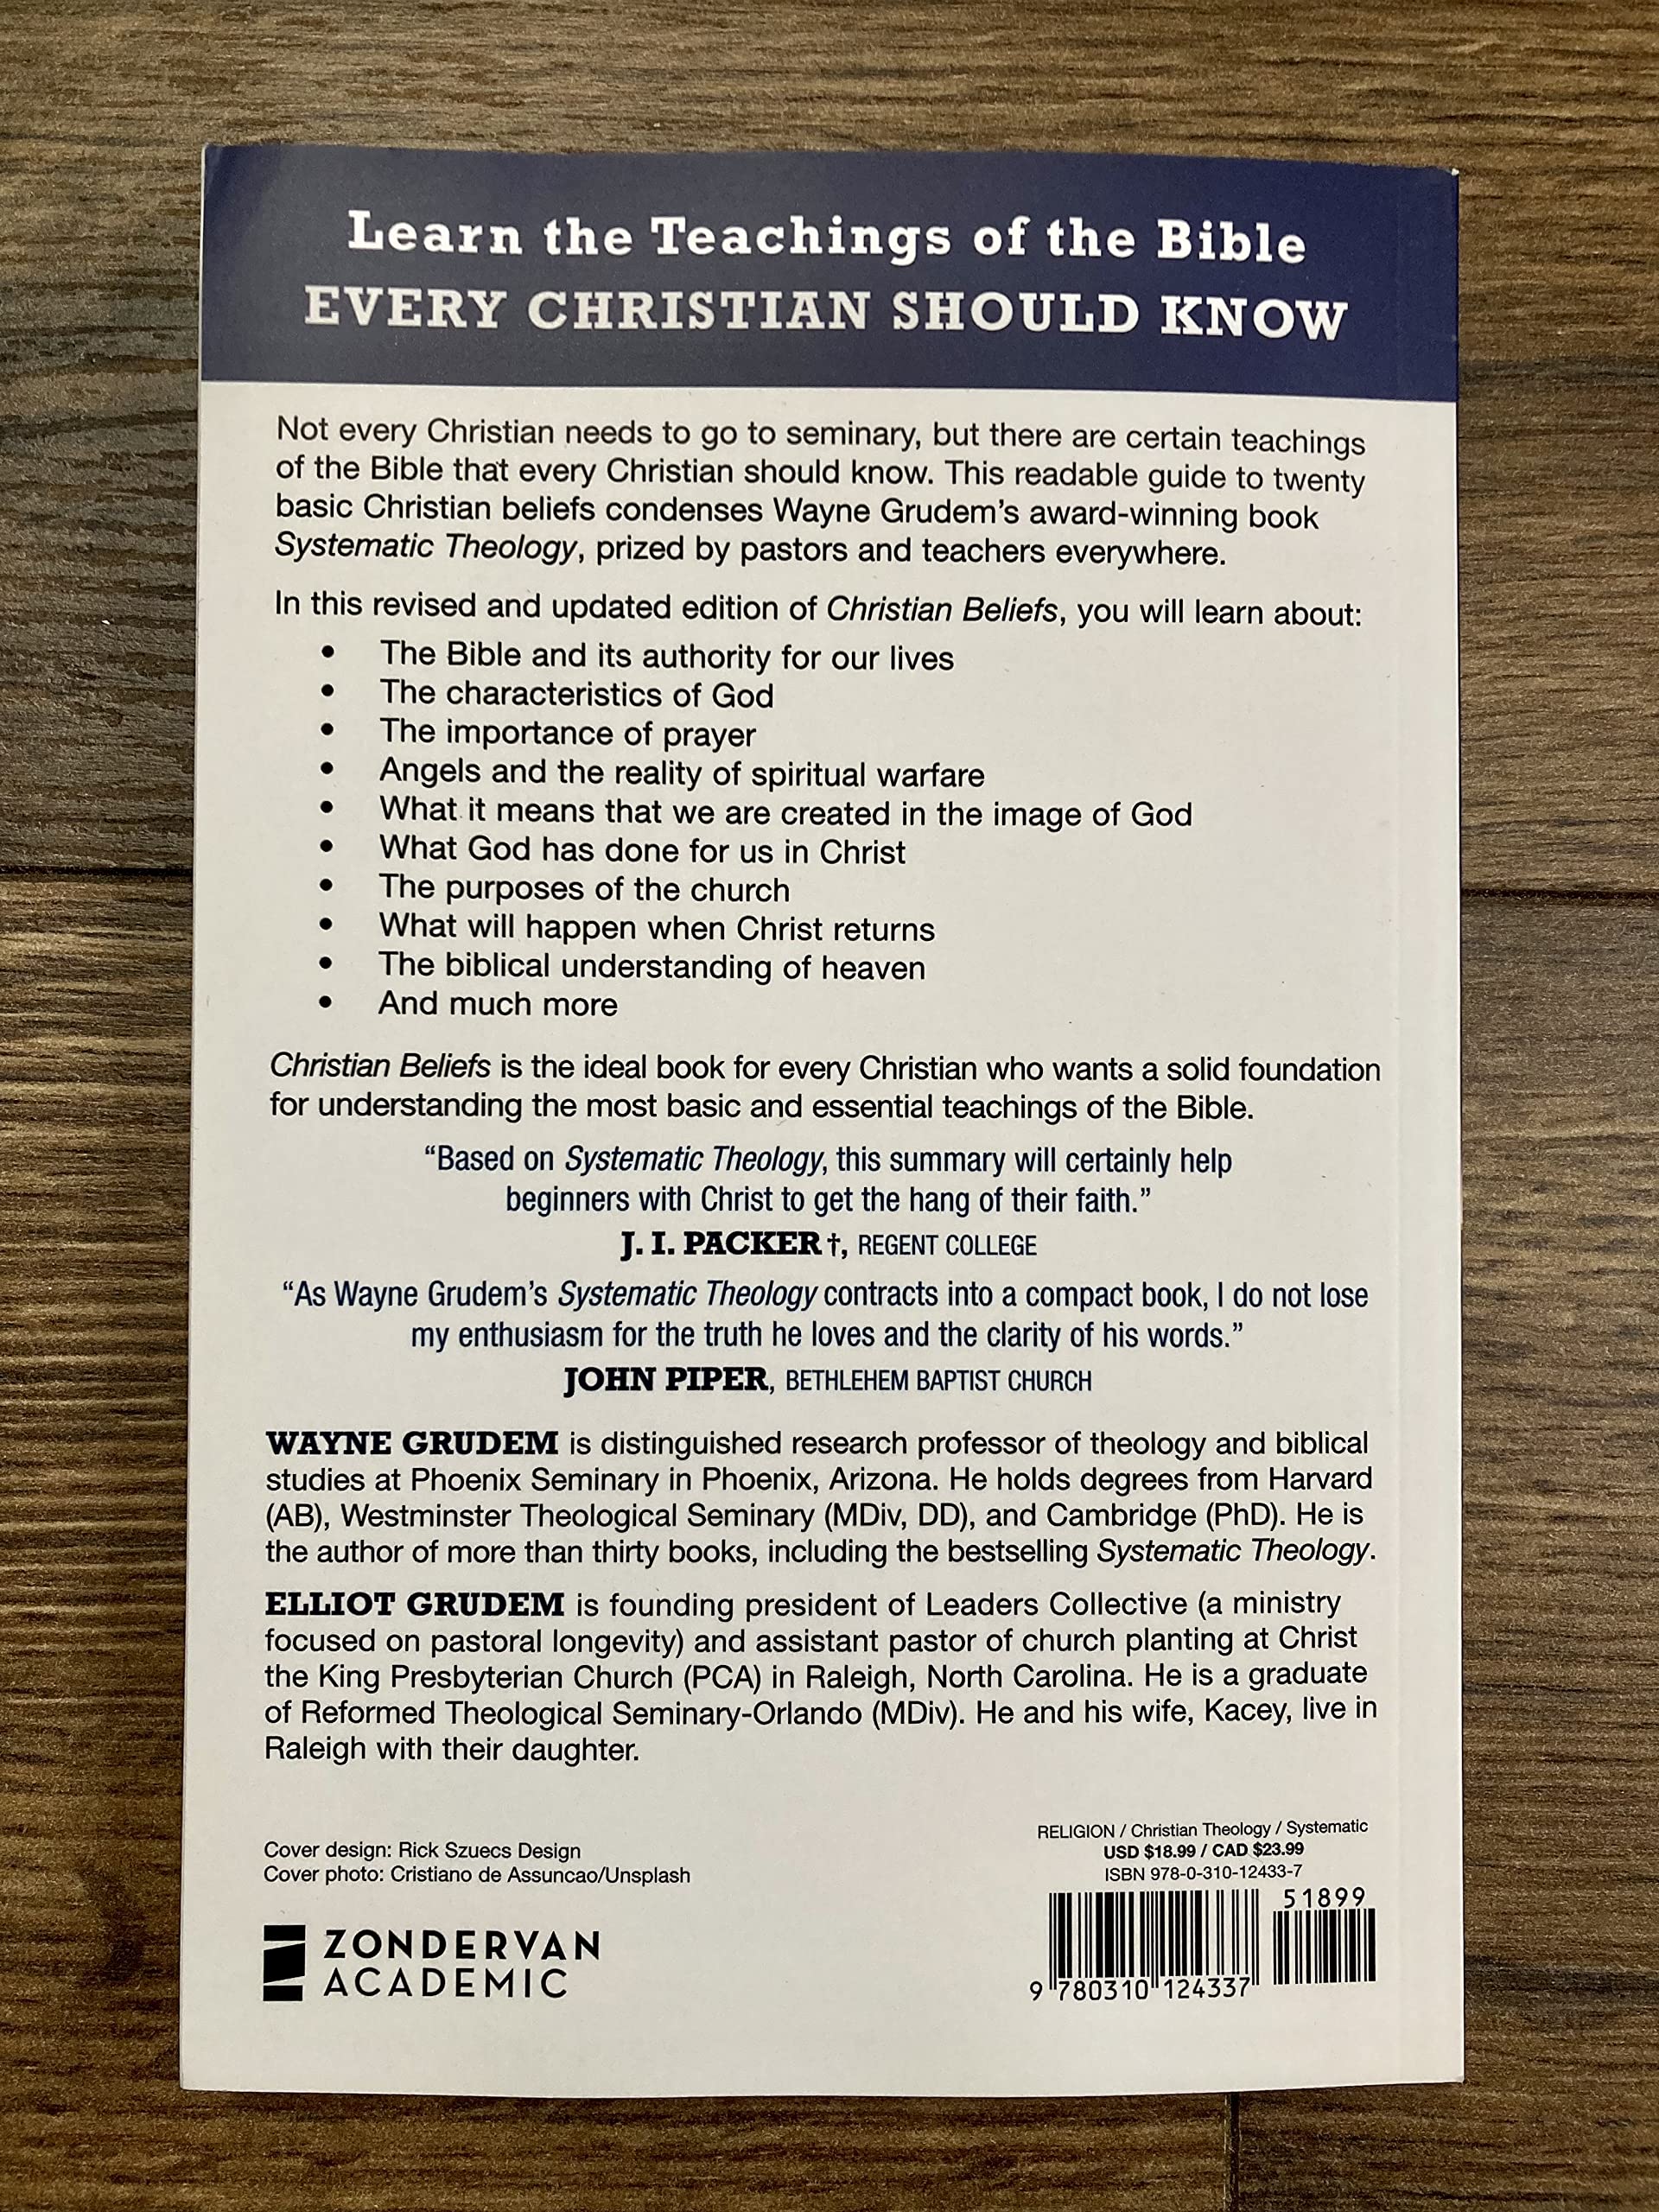 Christian Beliefs, Revised Edition: Twenty Basics Every Christian Should Know